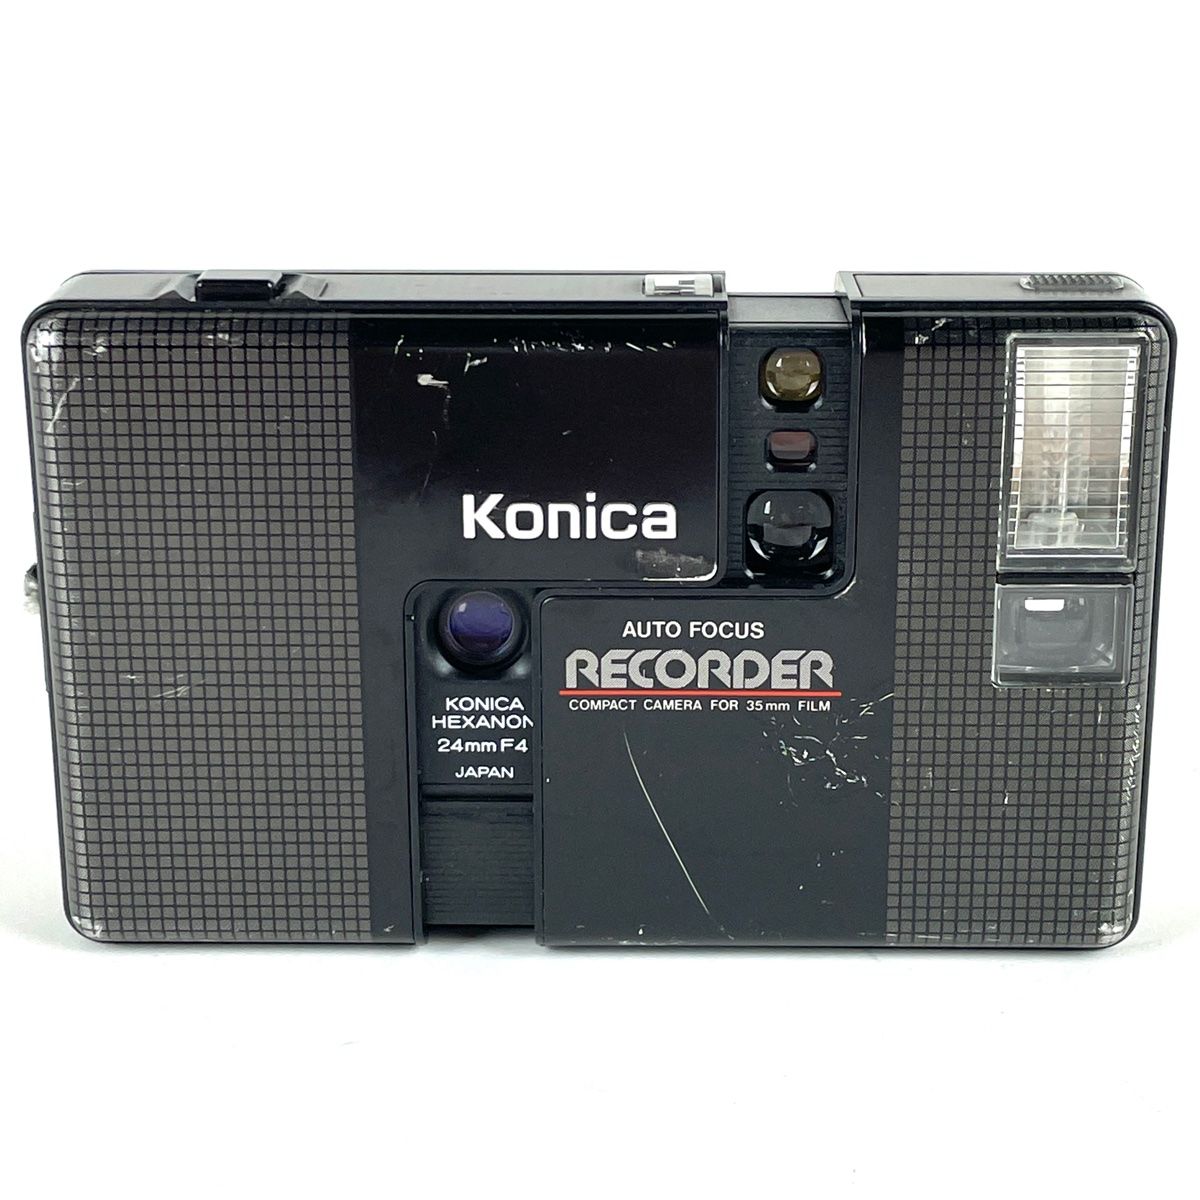 Konica recorder コニカ レコーダー - フィルムカメラ